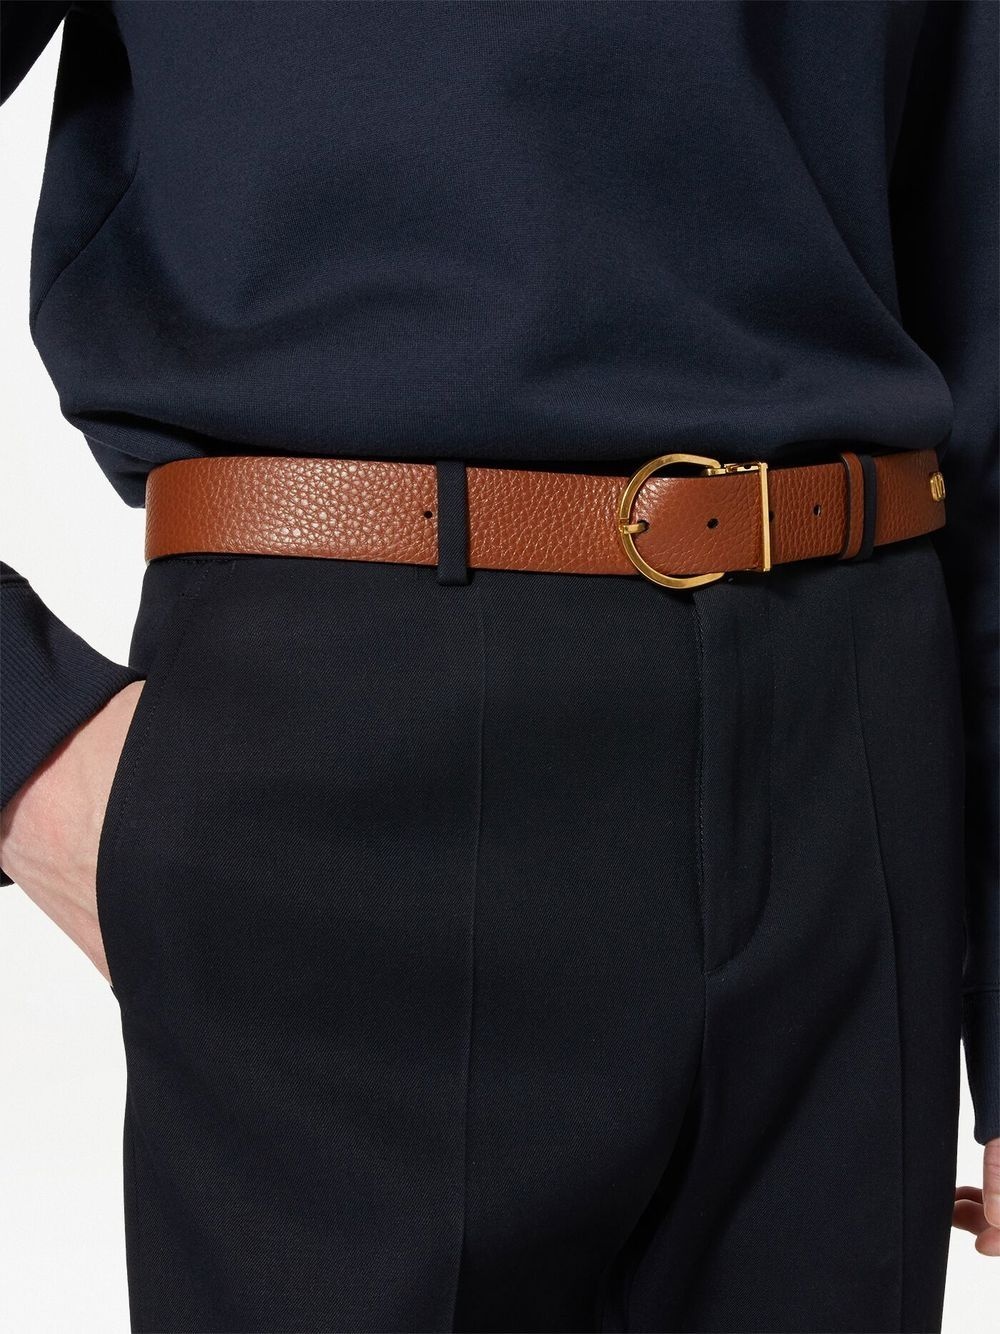 VLogo leather belt - 5